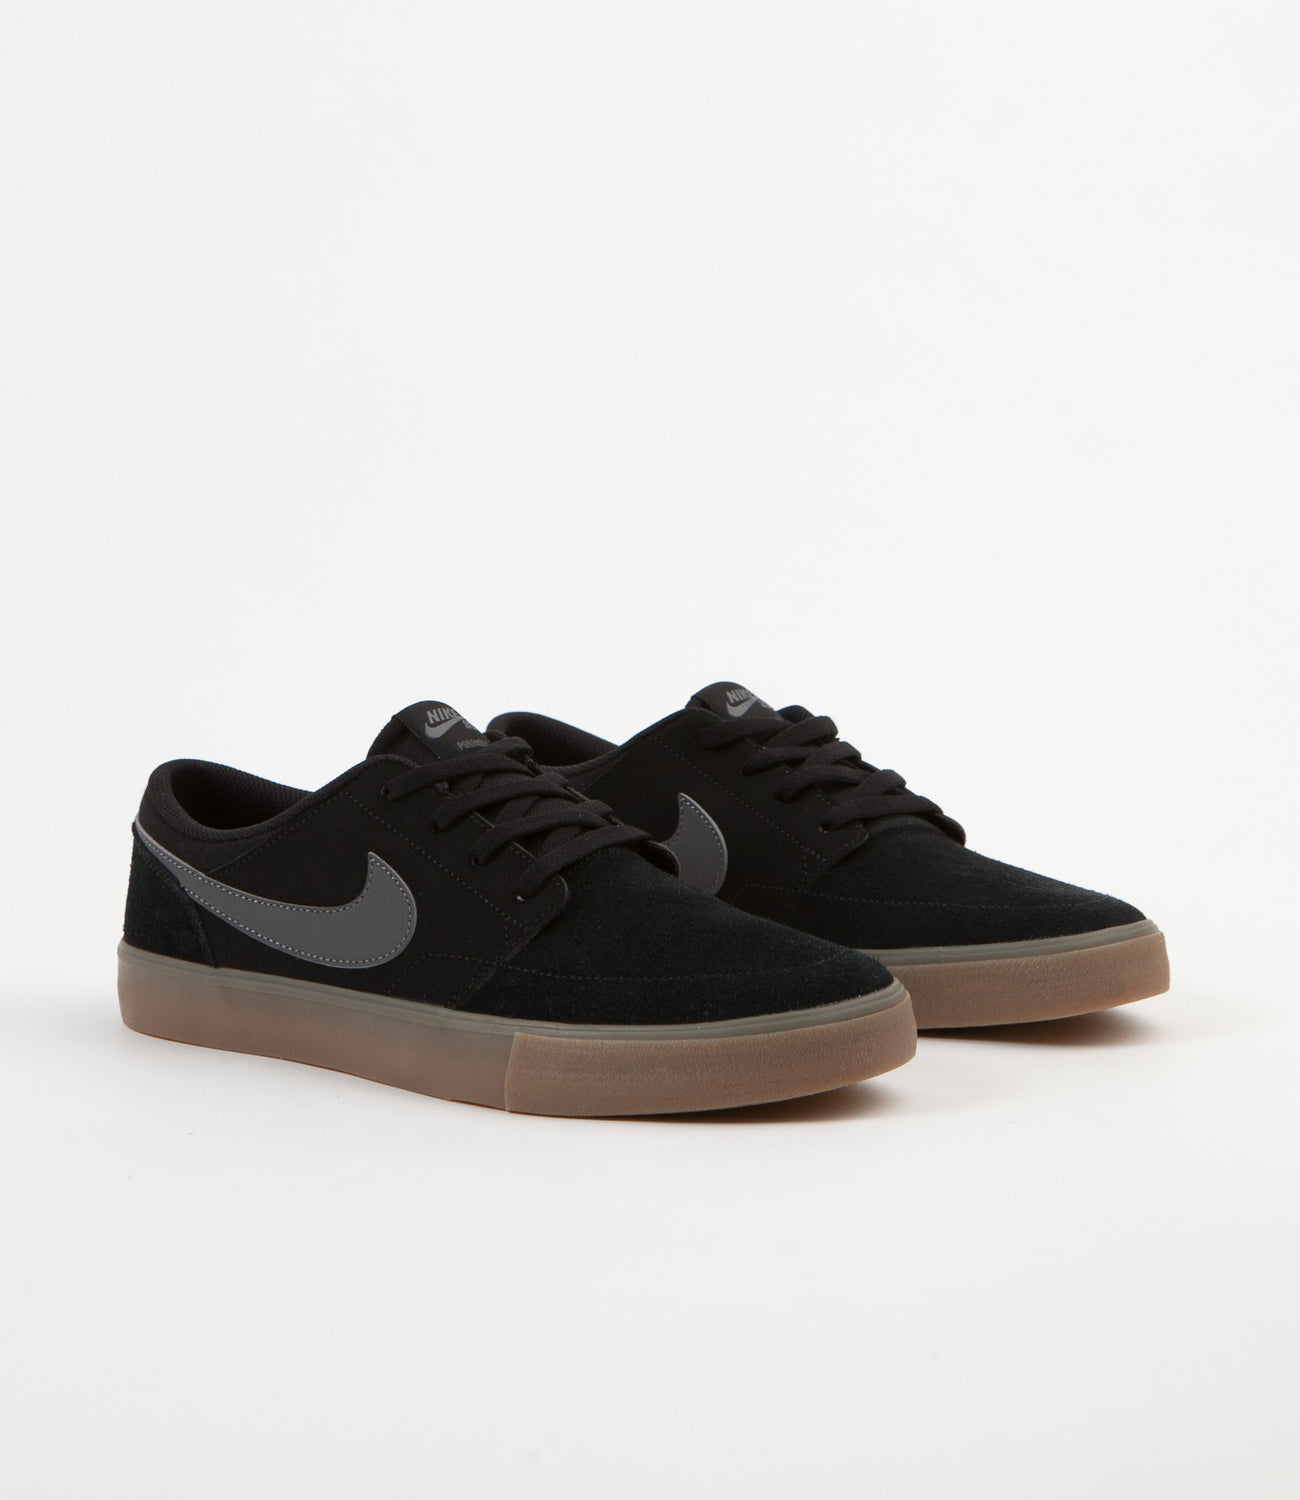 Nike SB Portmore II Shoes - Black / Dark Grey - Gum Br | Flatspot